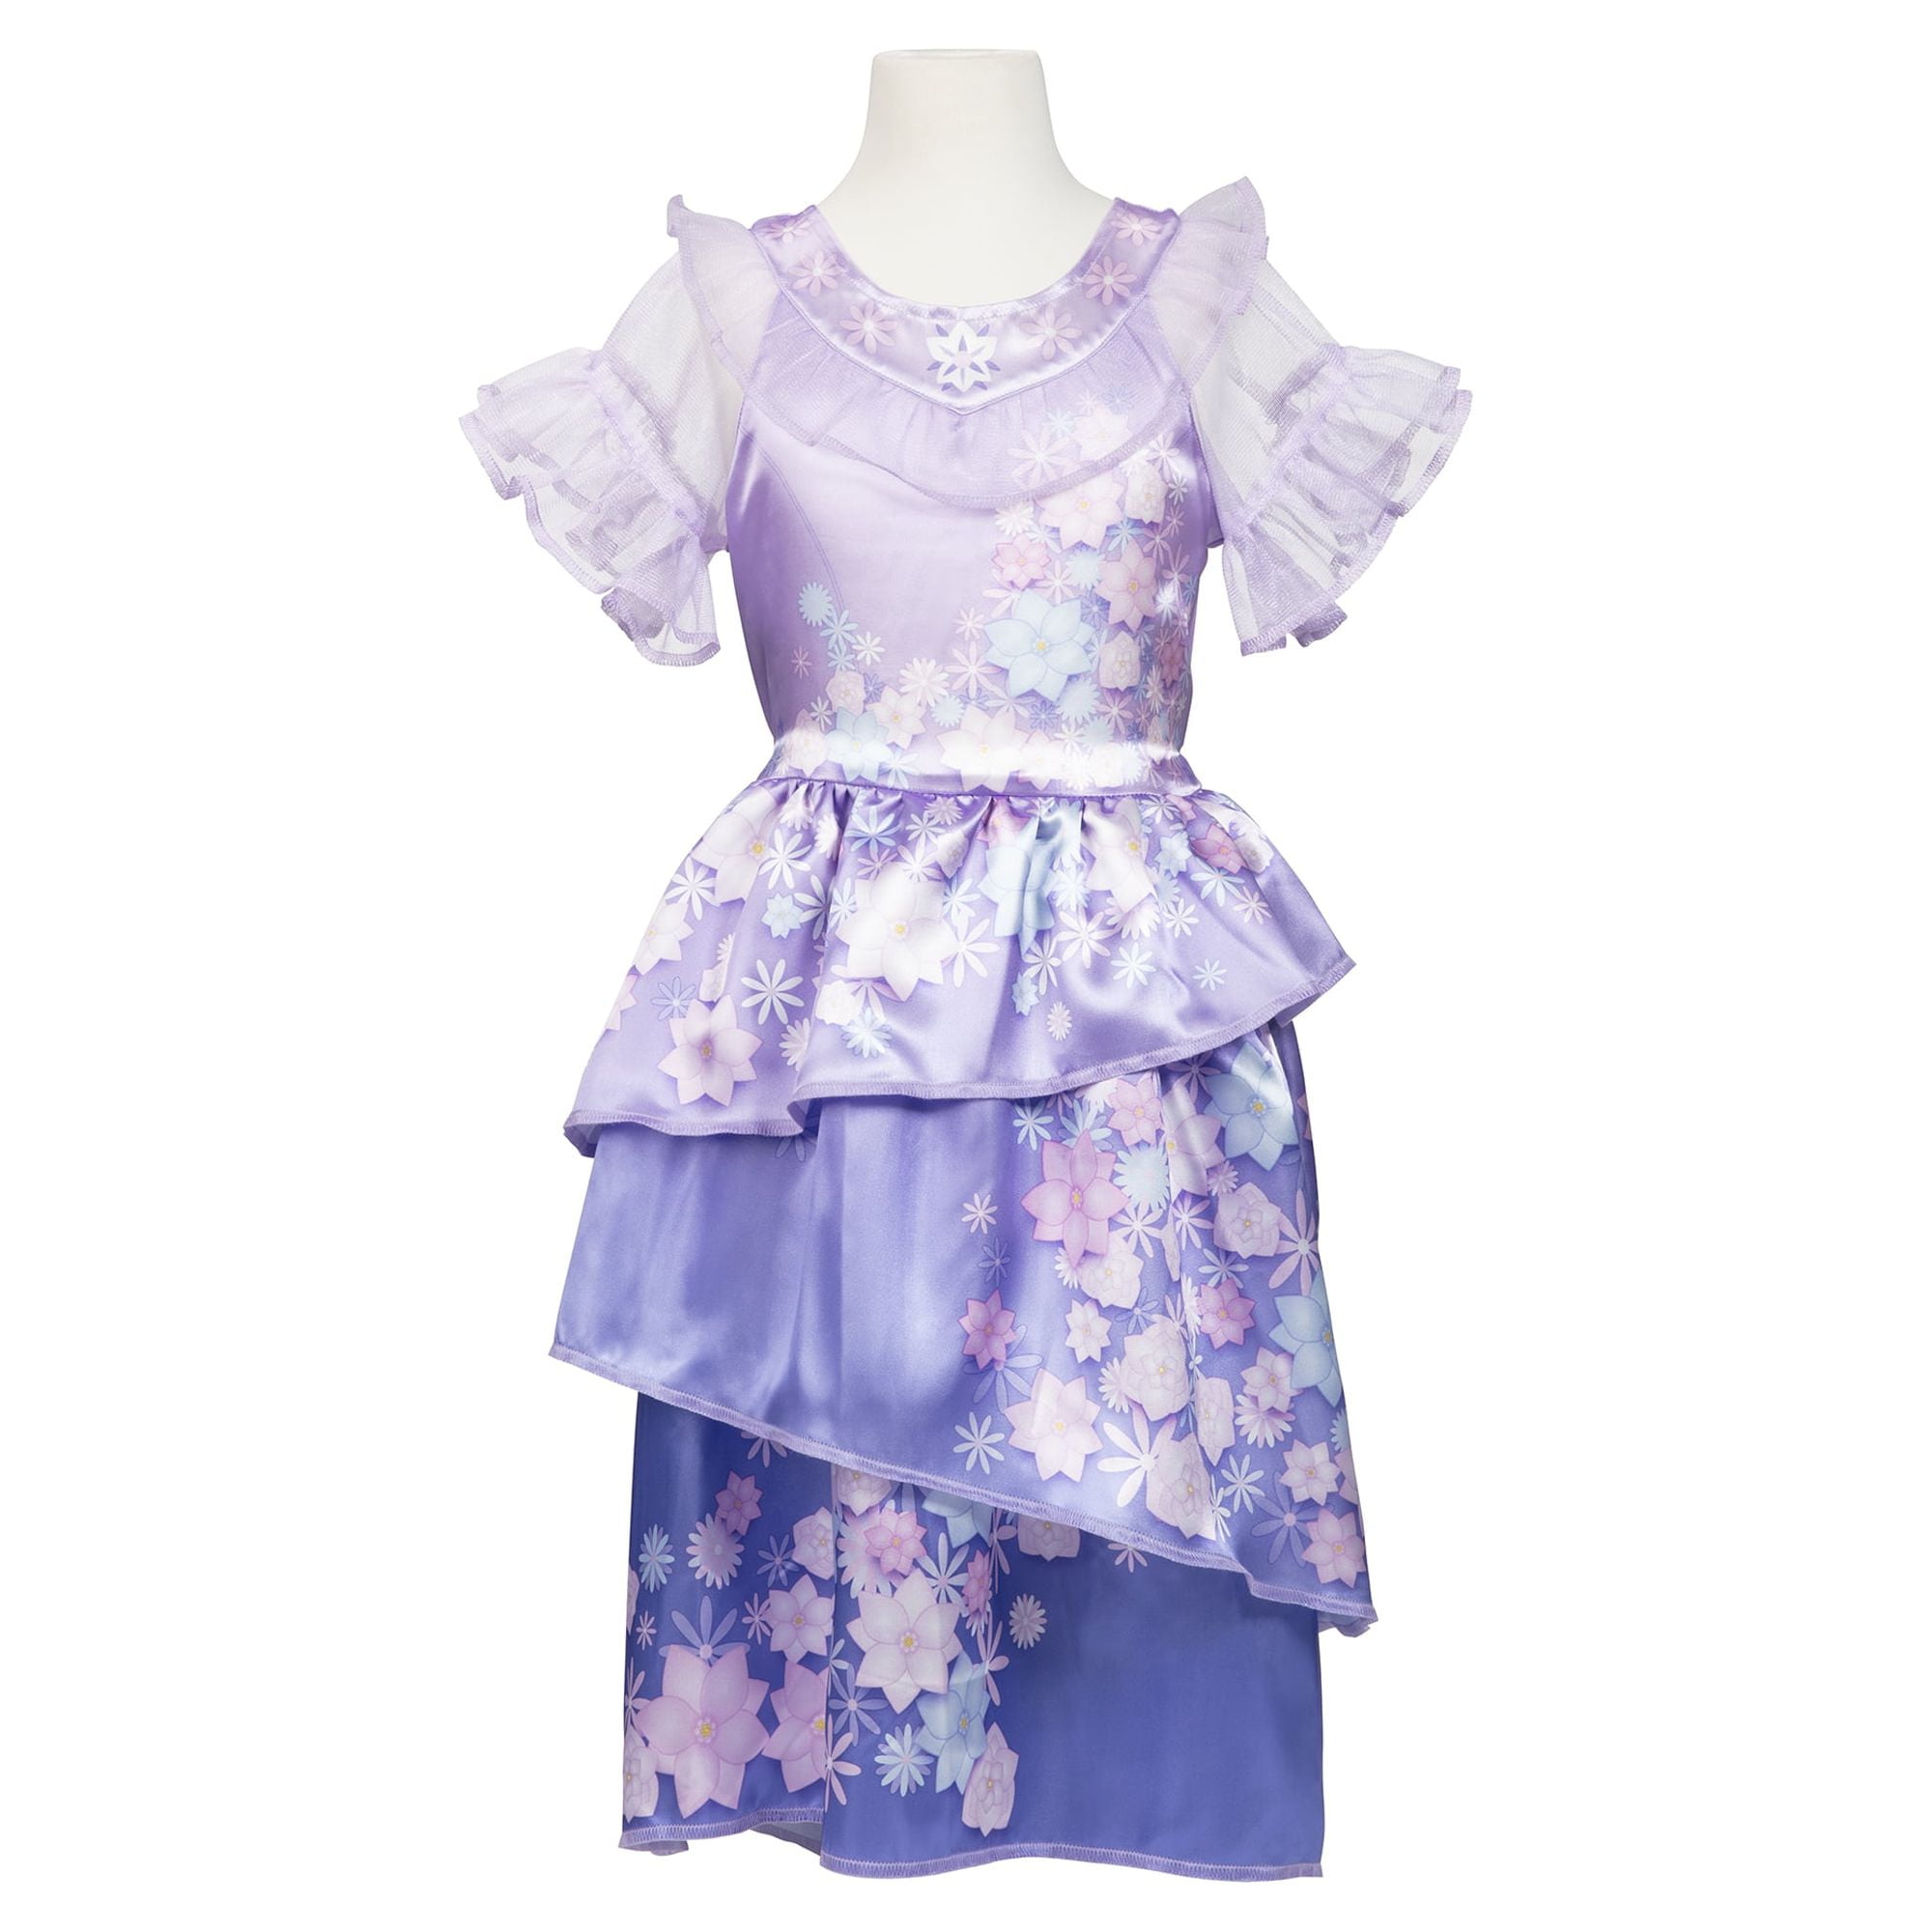 Disney Encanto Isabela Dress Costume for Children Sizes 4-6X Ages 3 & Up